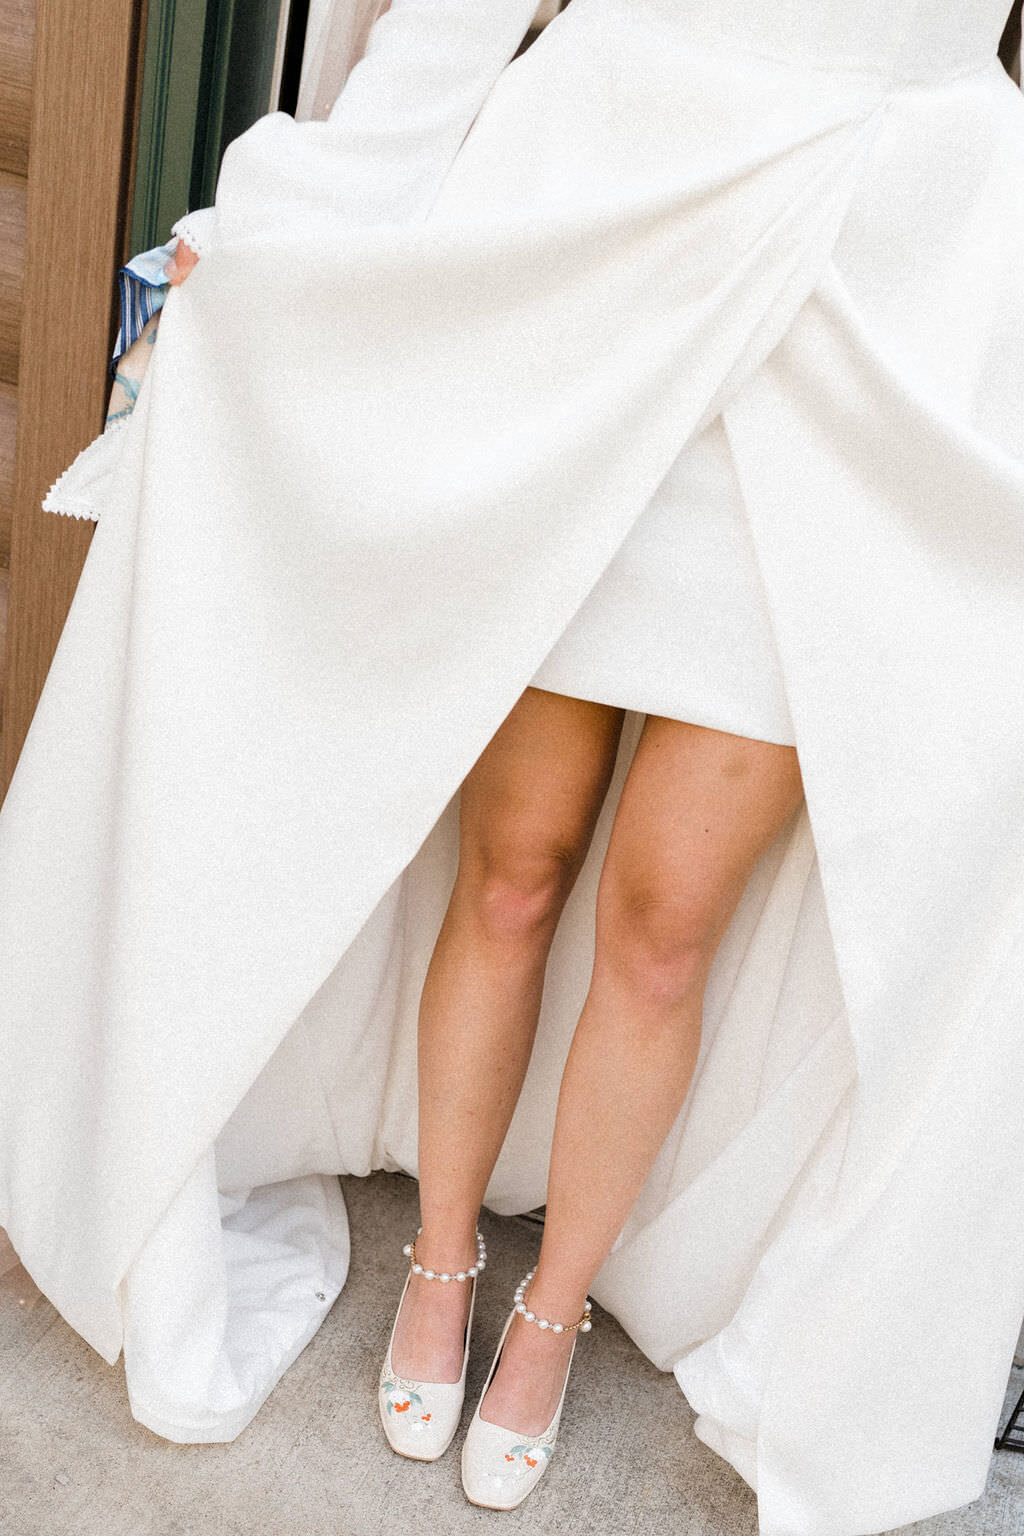 wedding dress falling around a brides shoes